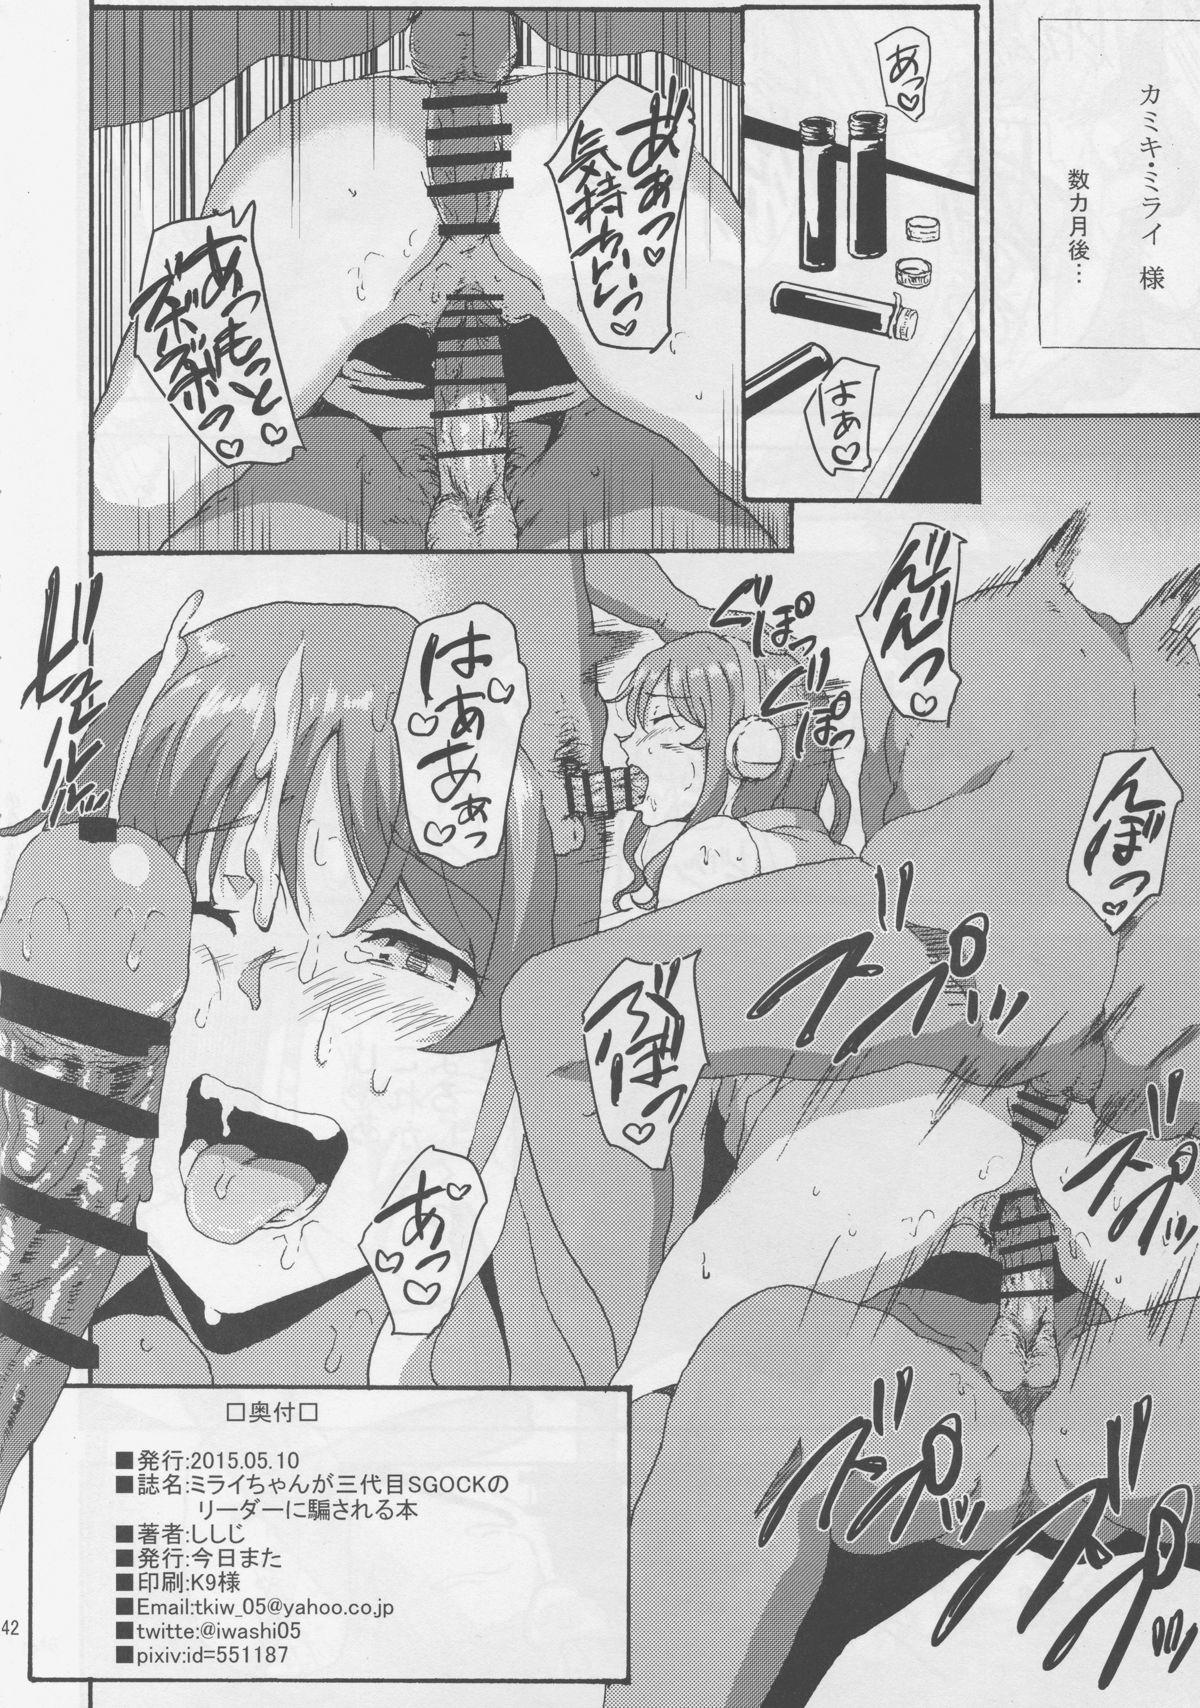 Sentando Mirai-chan ga Sandaime SGOCK no Leader ni Damasare Yarechau Hon - Gundam build fighters try Freak - Page 42